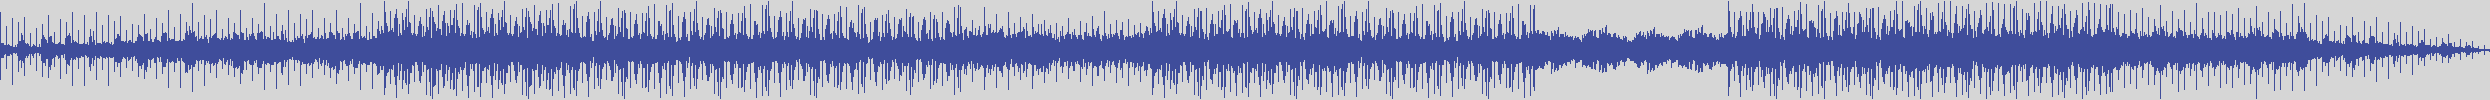 noclouds_chillout [NOC002] Cut Groove - Yedeka [Original Mix] audio wave form